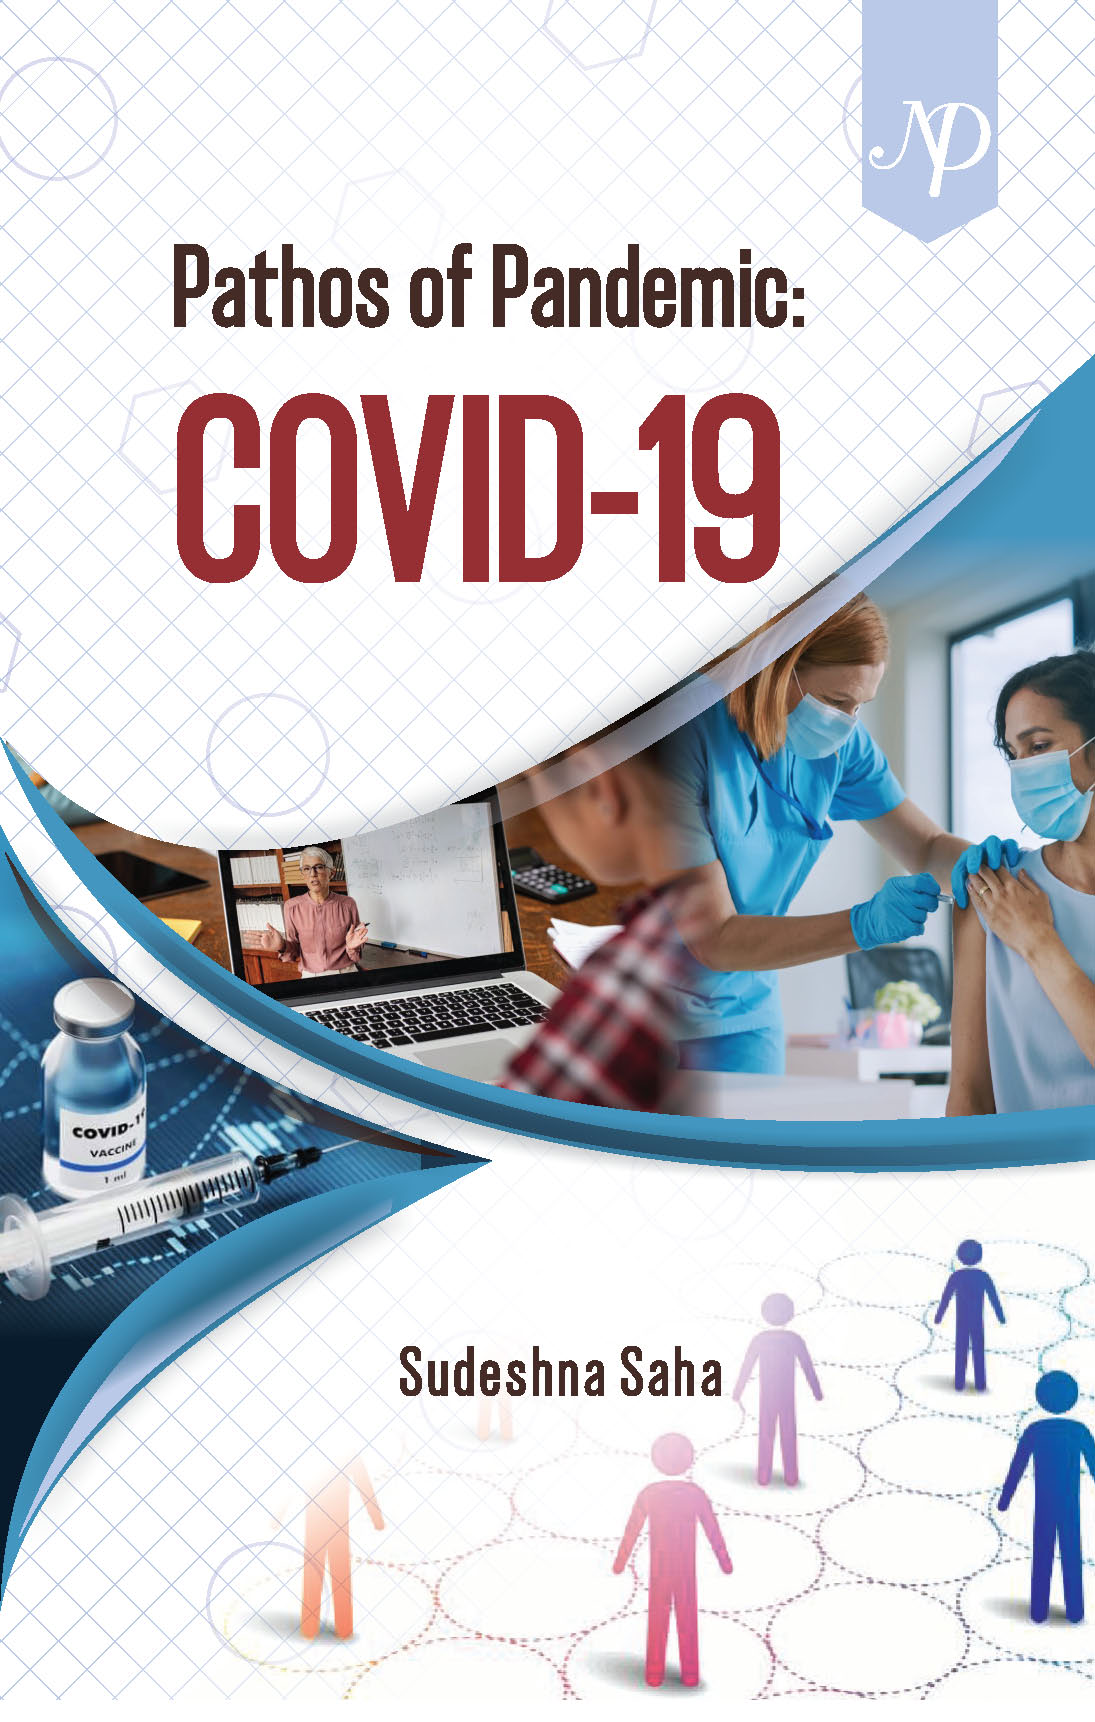 Pathos of Pandemic Covid-19 By Sudheshna Saha cover.jpg